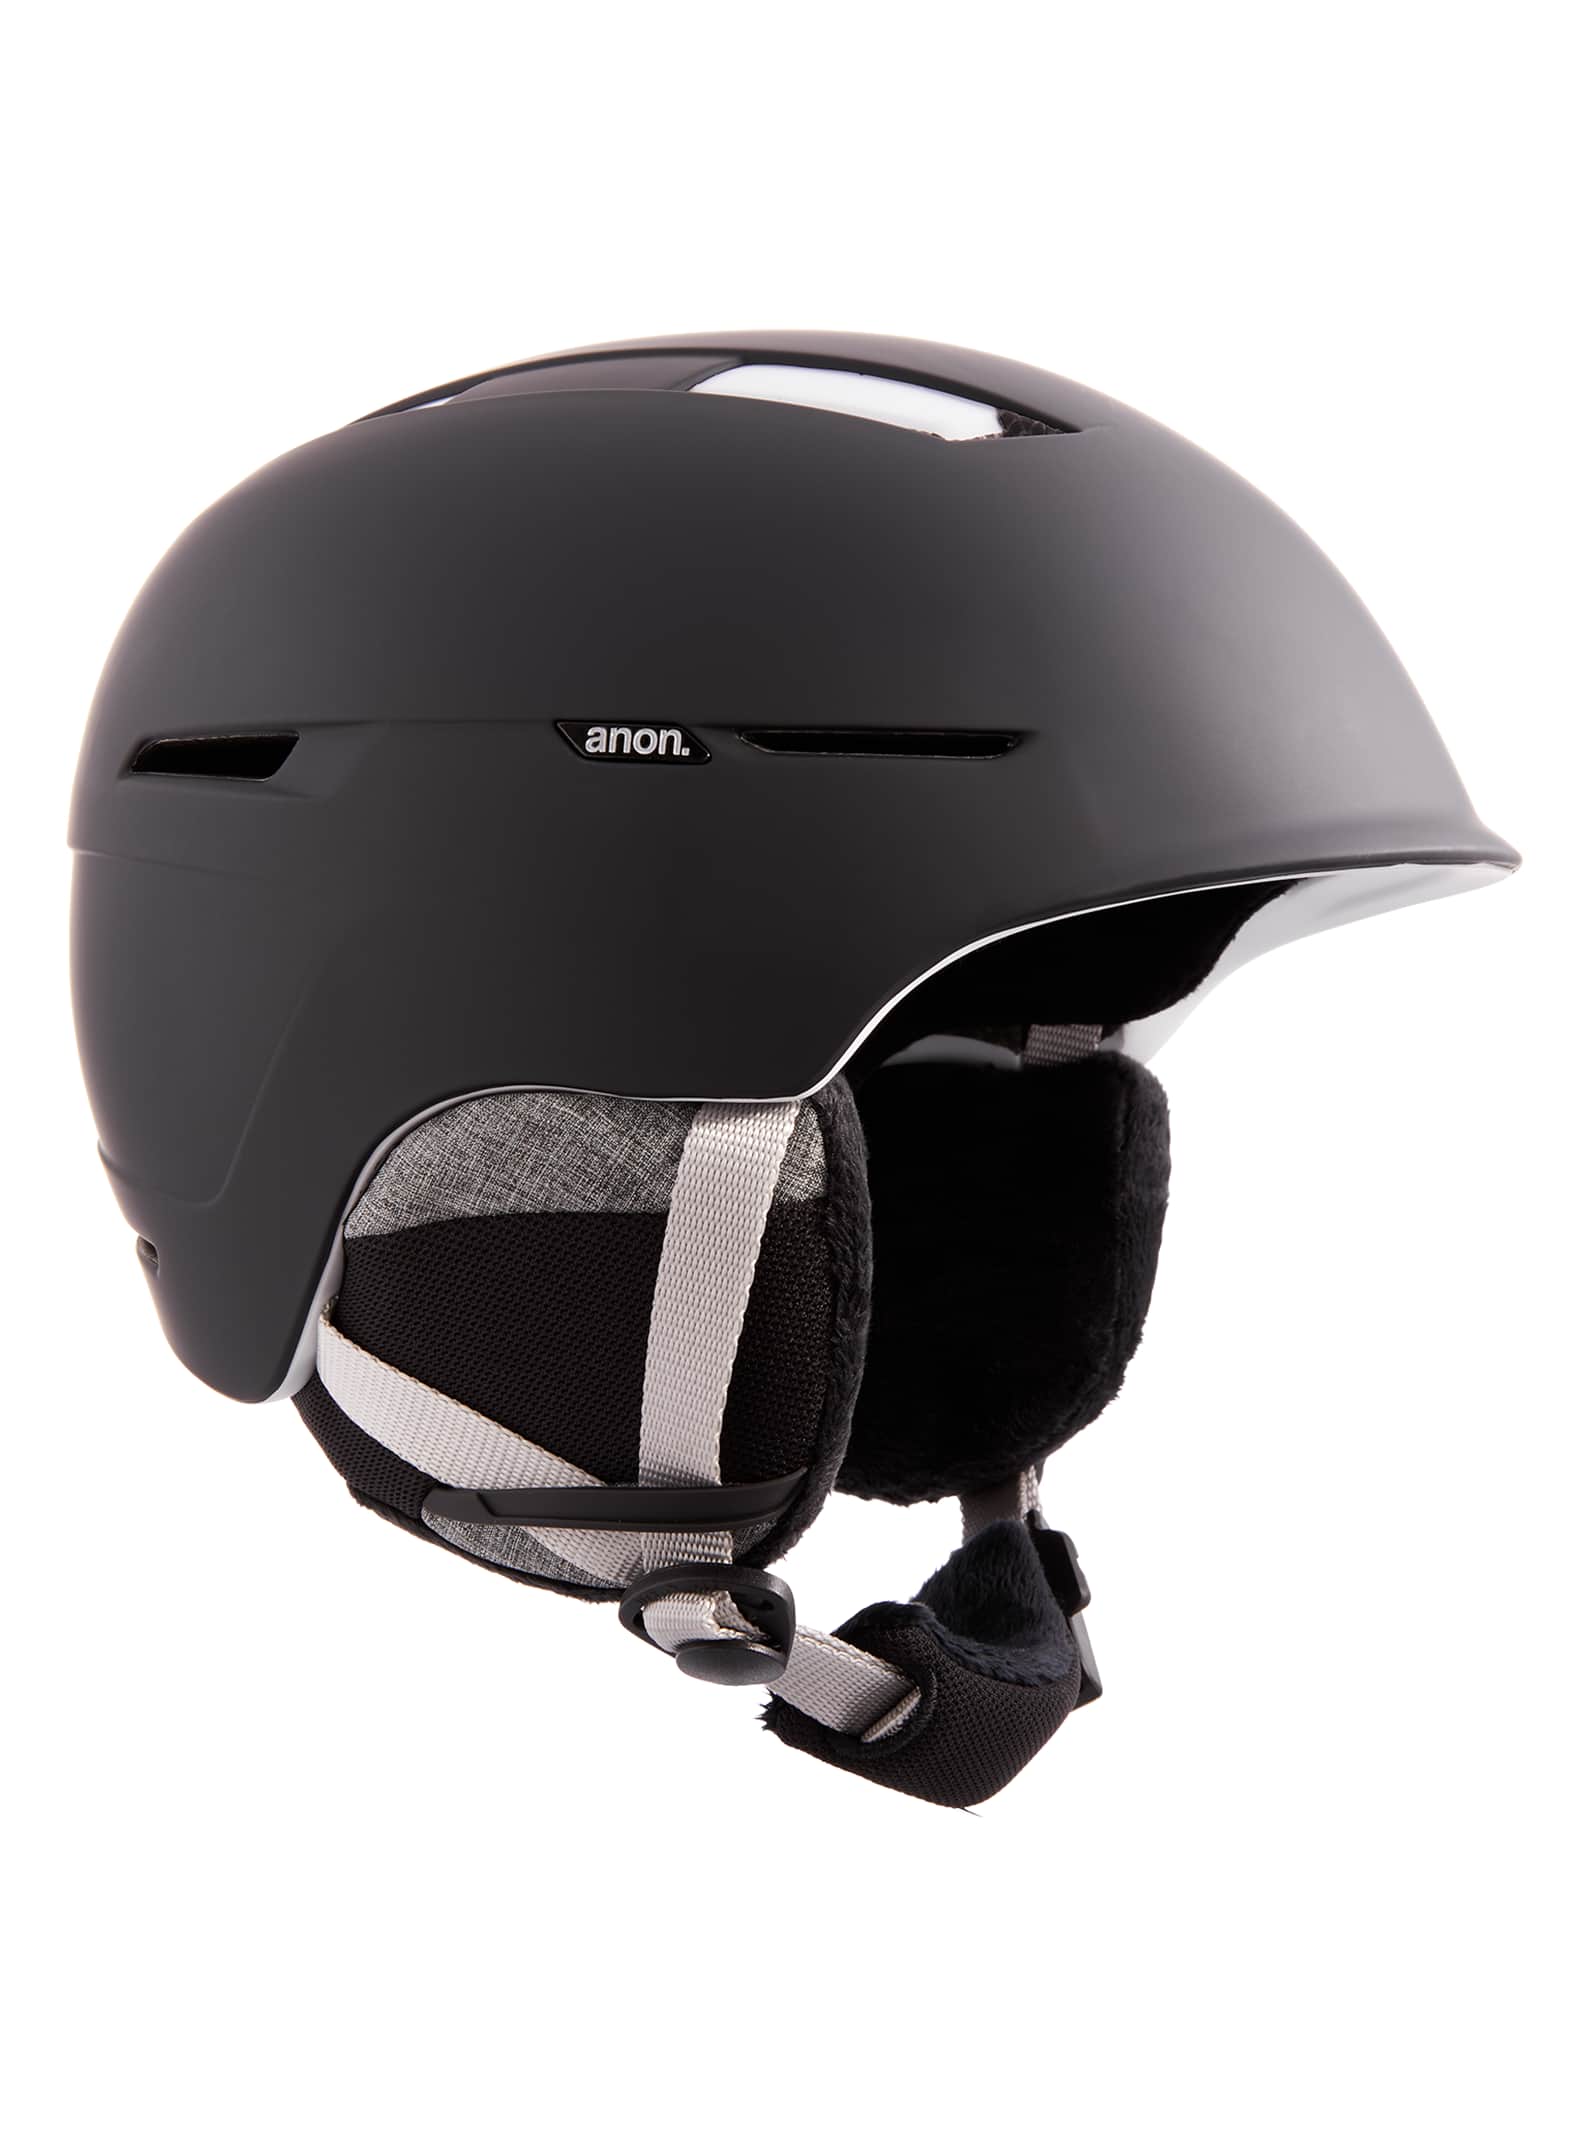 Anon Auburn Helmet - Round Fit | Burton.com Winter 2022 US